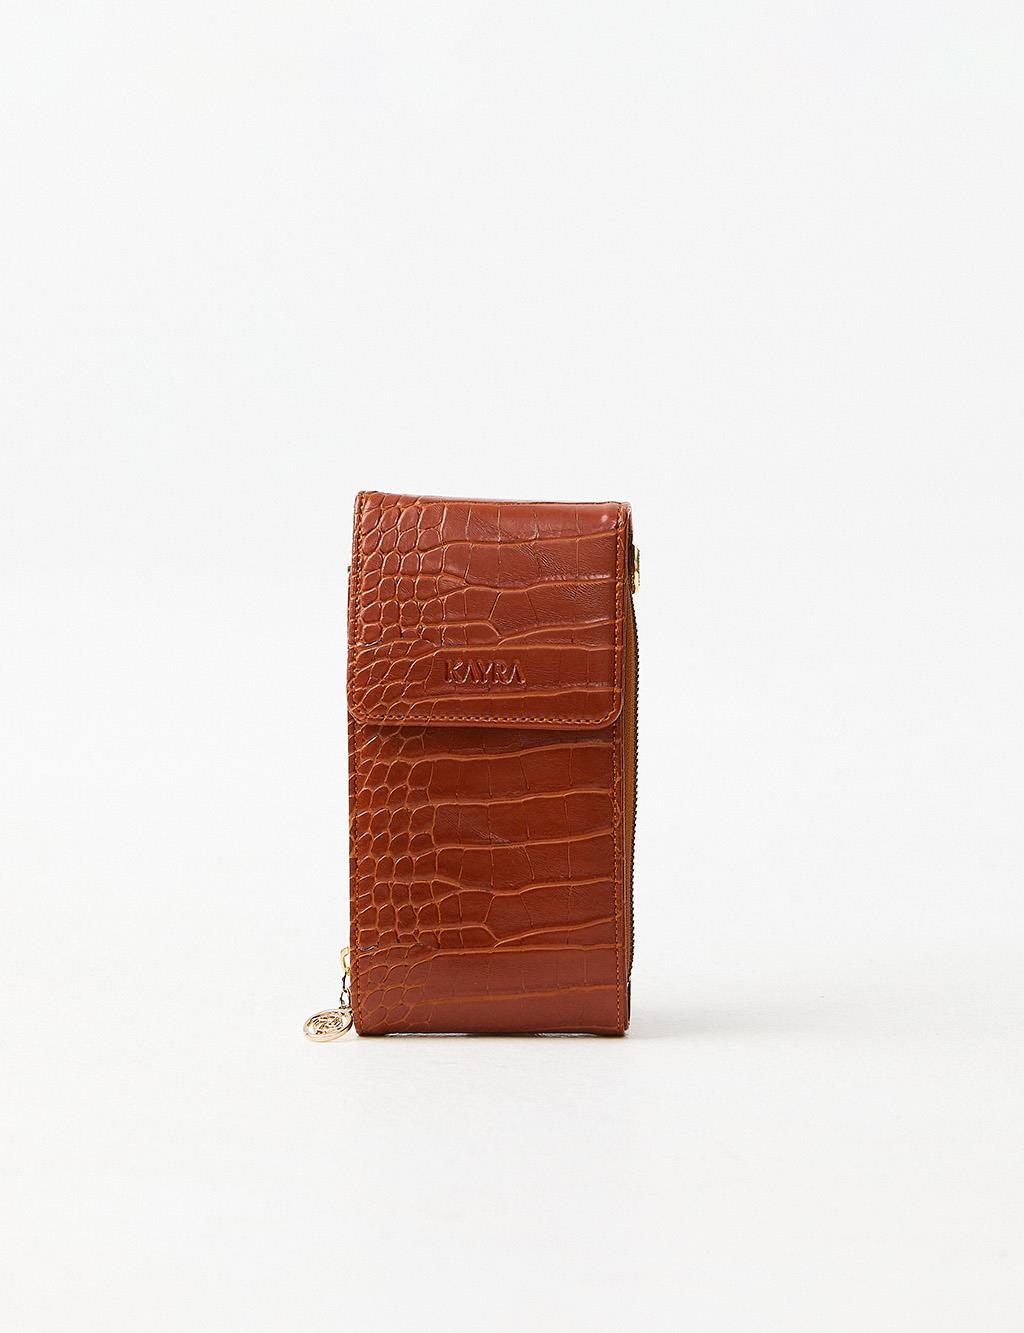 Croco Patterned Multifunctional Bag Wallet Tobacco